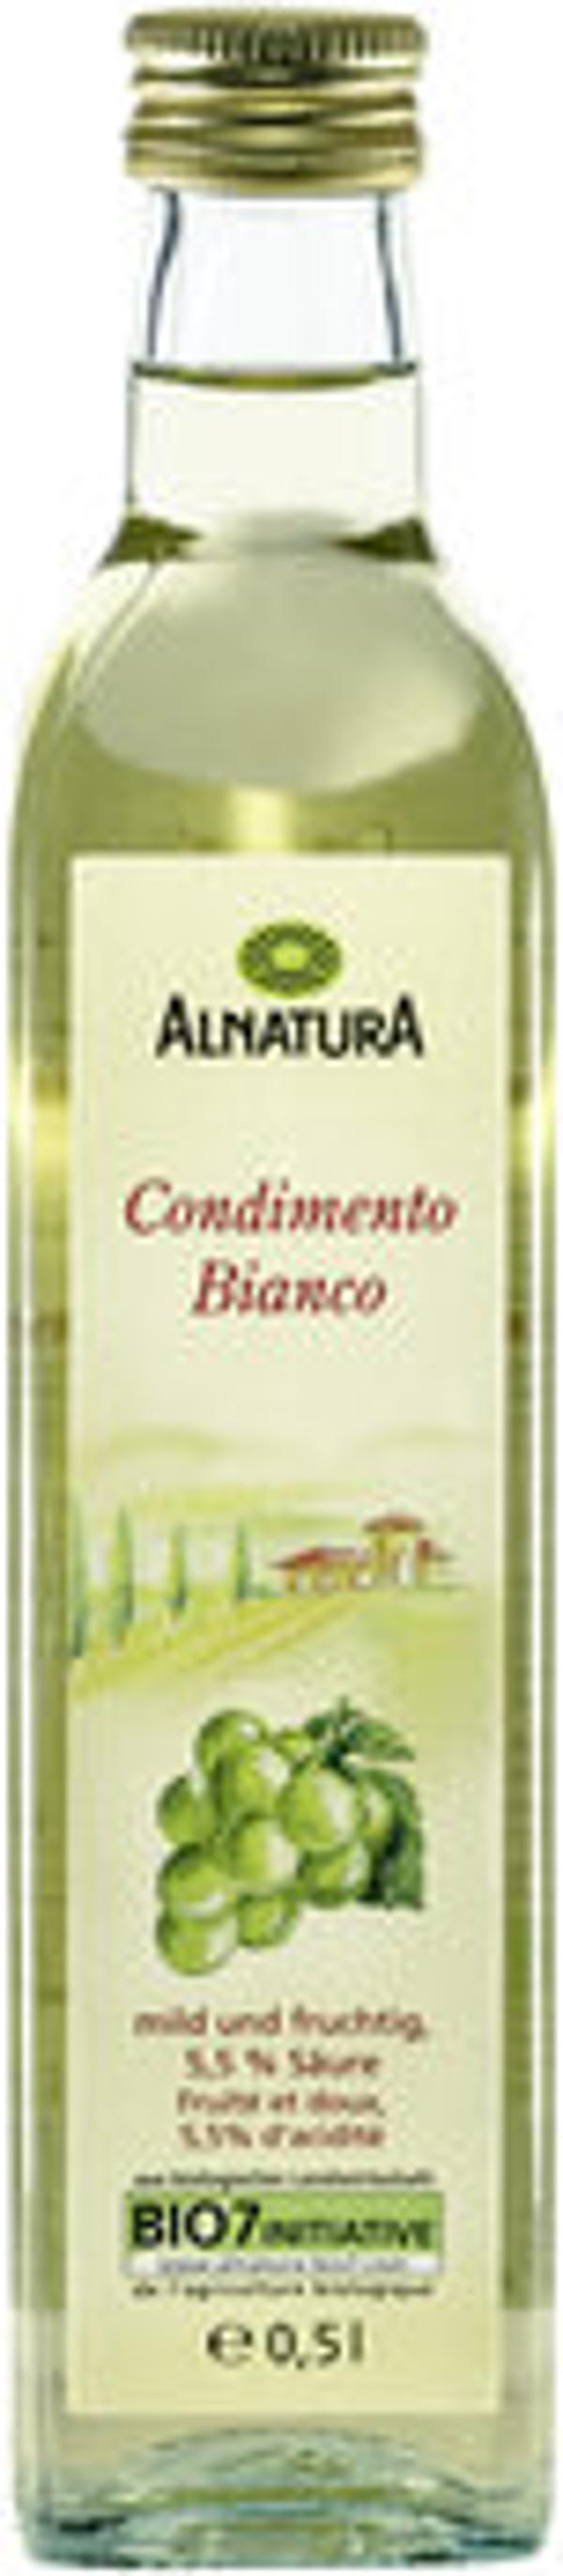 Produktfoto zu Alnatura Condimento Bianco 0,5L